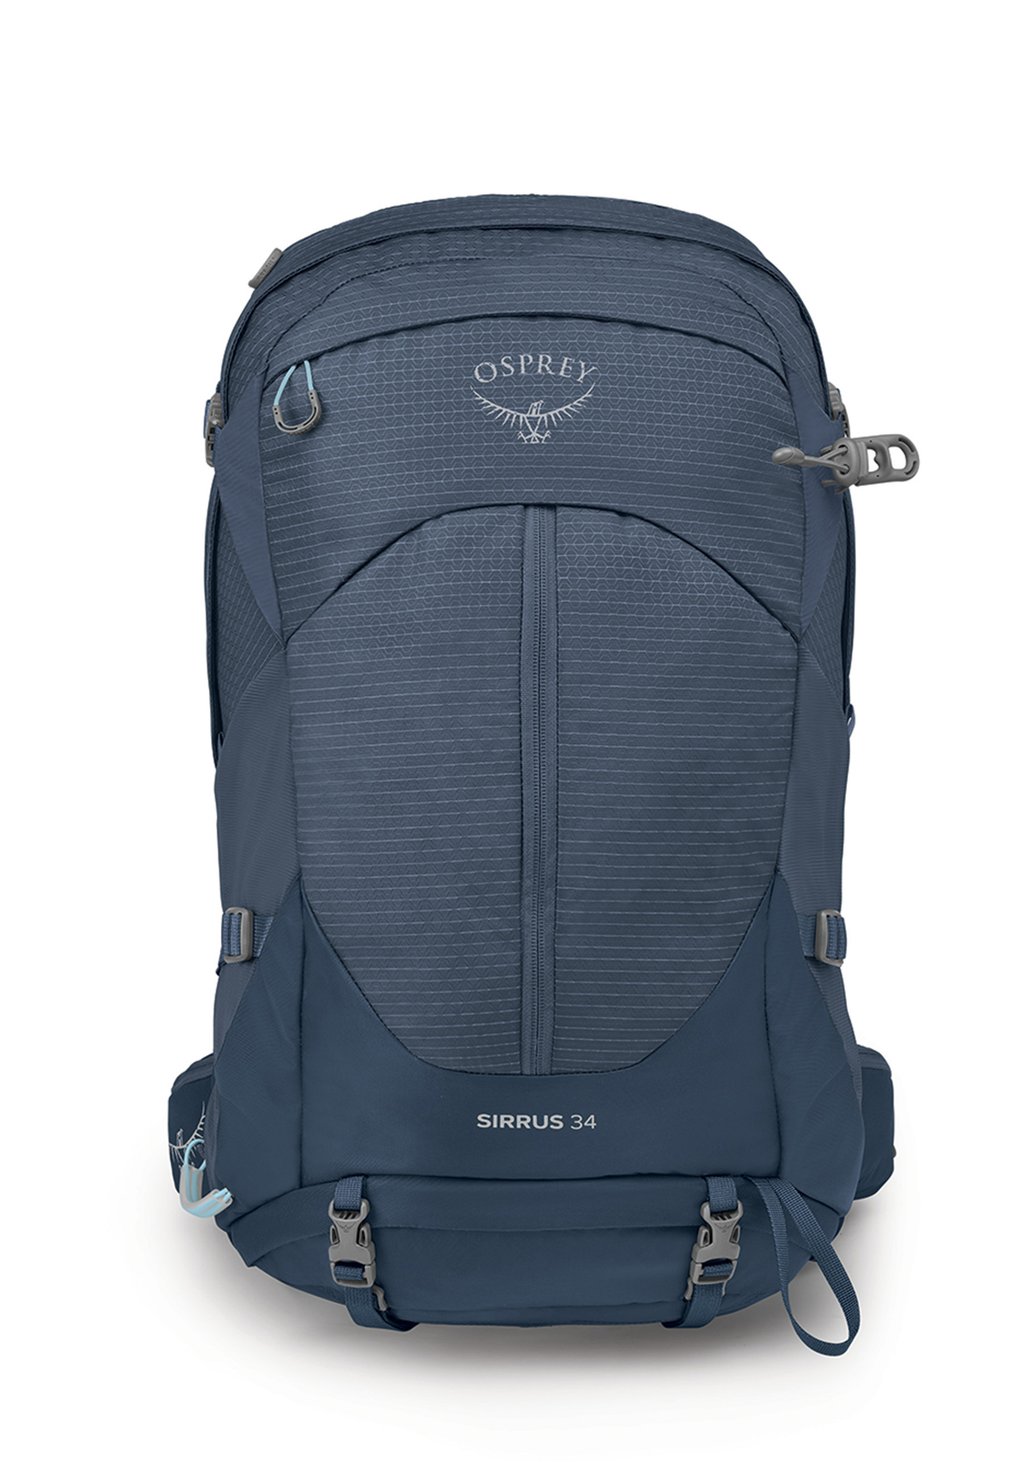 Туристический рюкзак SIRRUS Osprey, цвет muted space blue